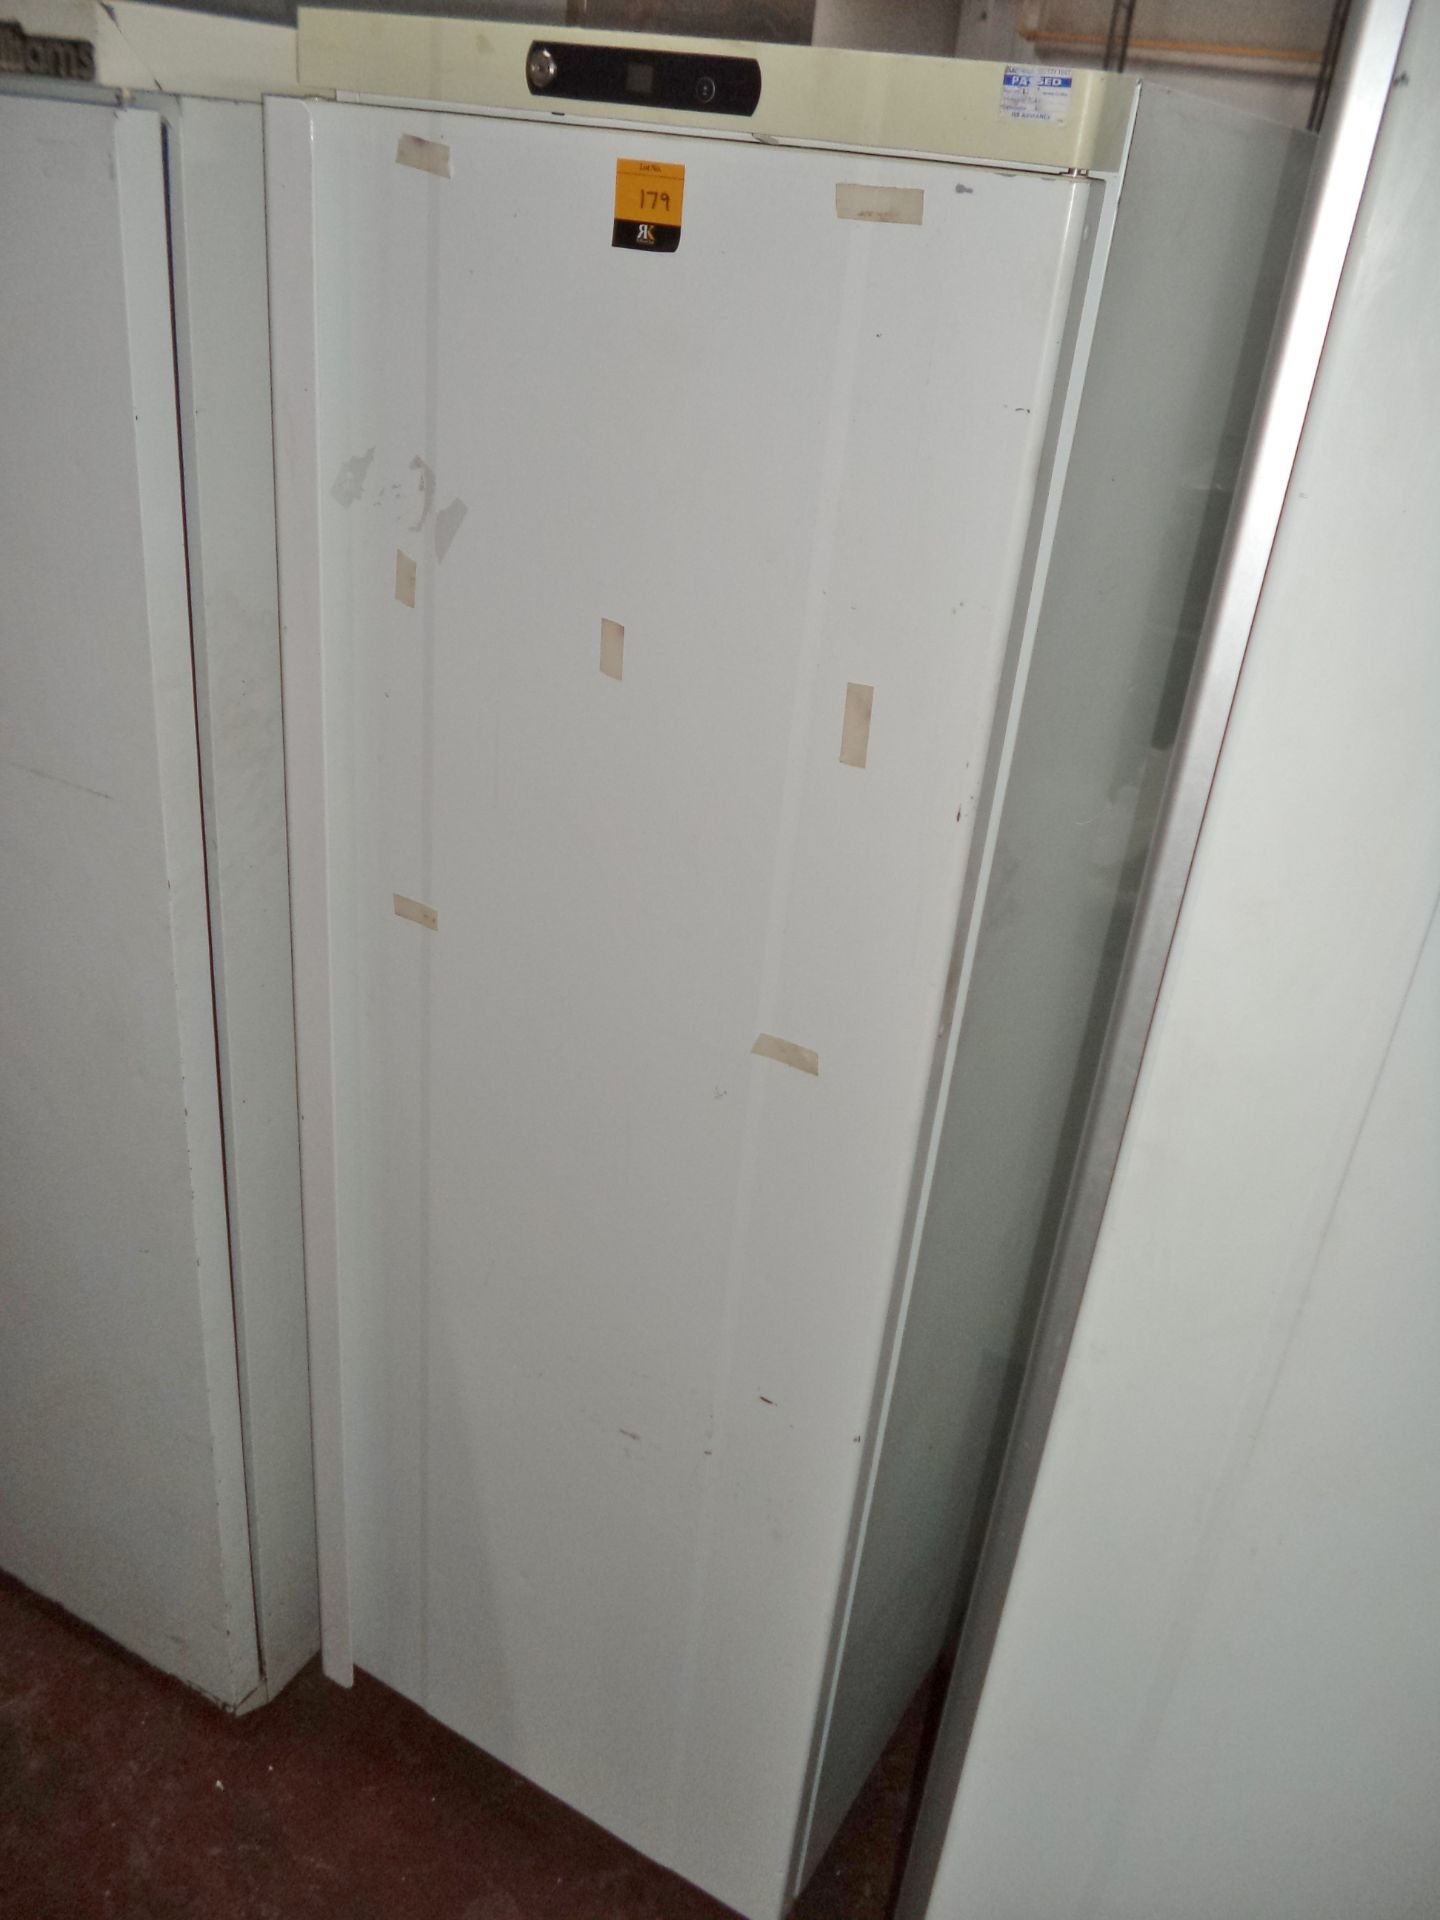 Gram K400 floor standing fridge IMPORTANT: Please remember goods successfully bid upon must be